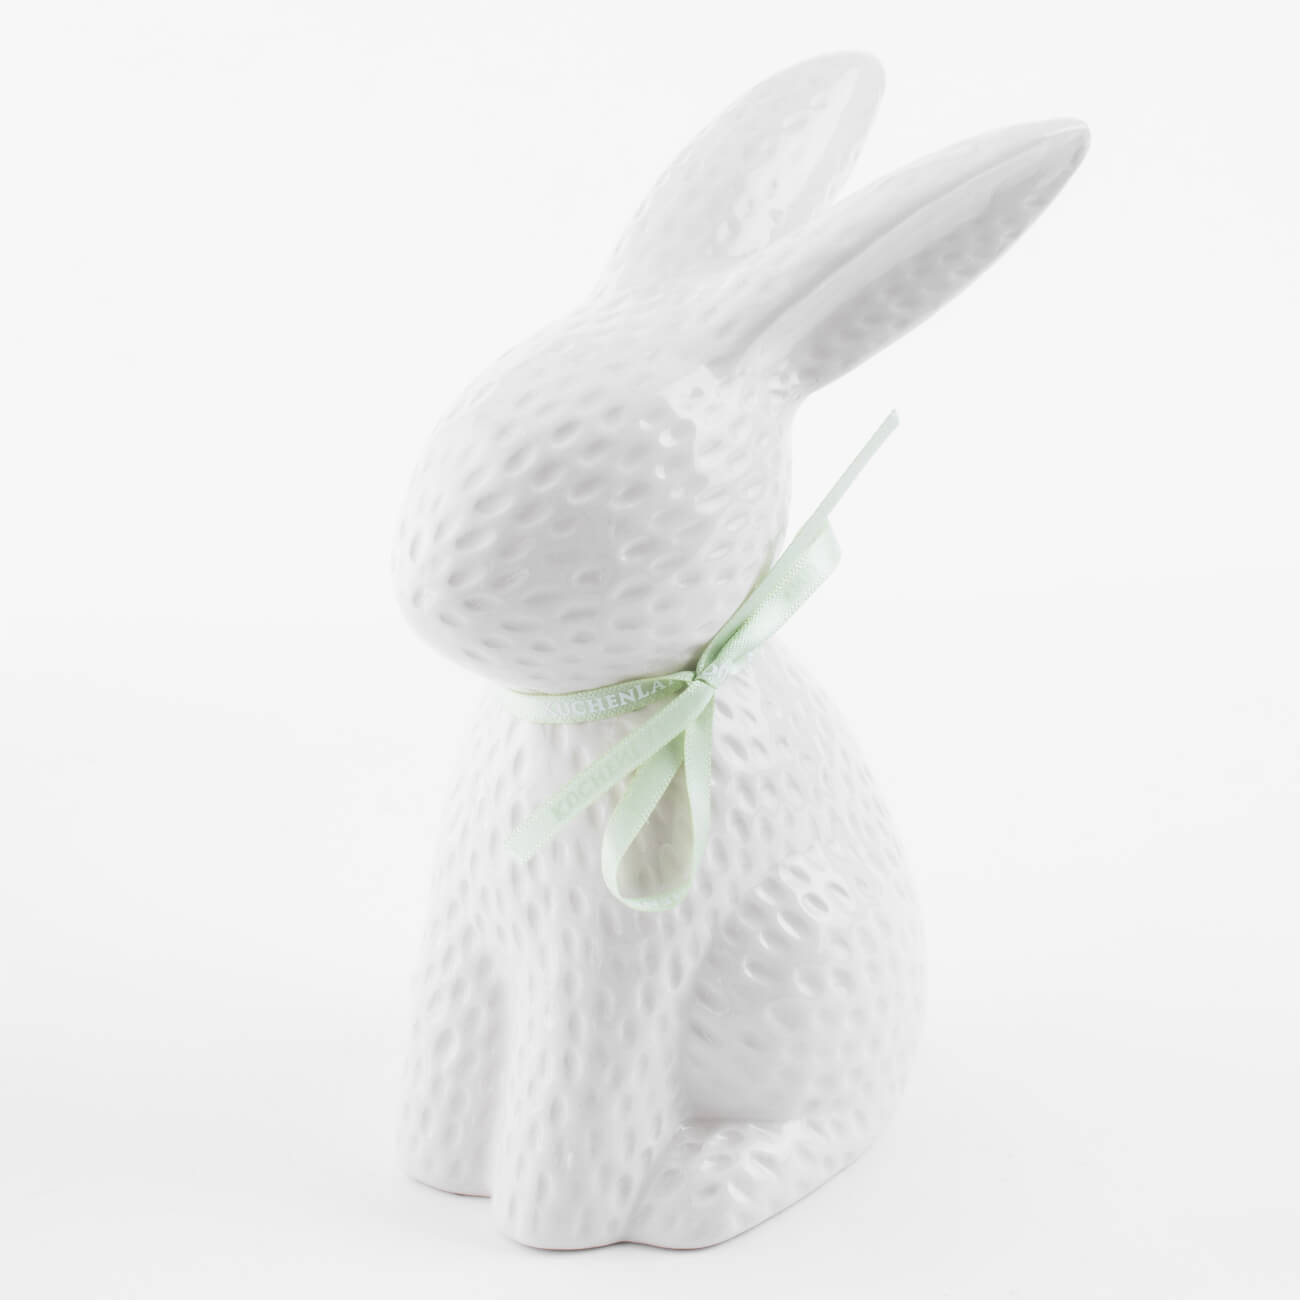 Статуэтка, 18 см, керамика, молочная Кролик сидит, Easter blooming статуэтка 14 см фарфор p бежевая кролик сидит natural easter